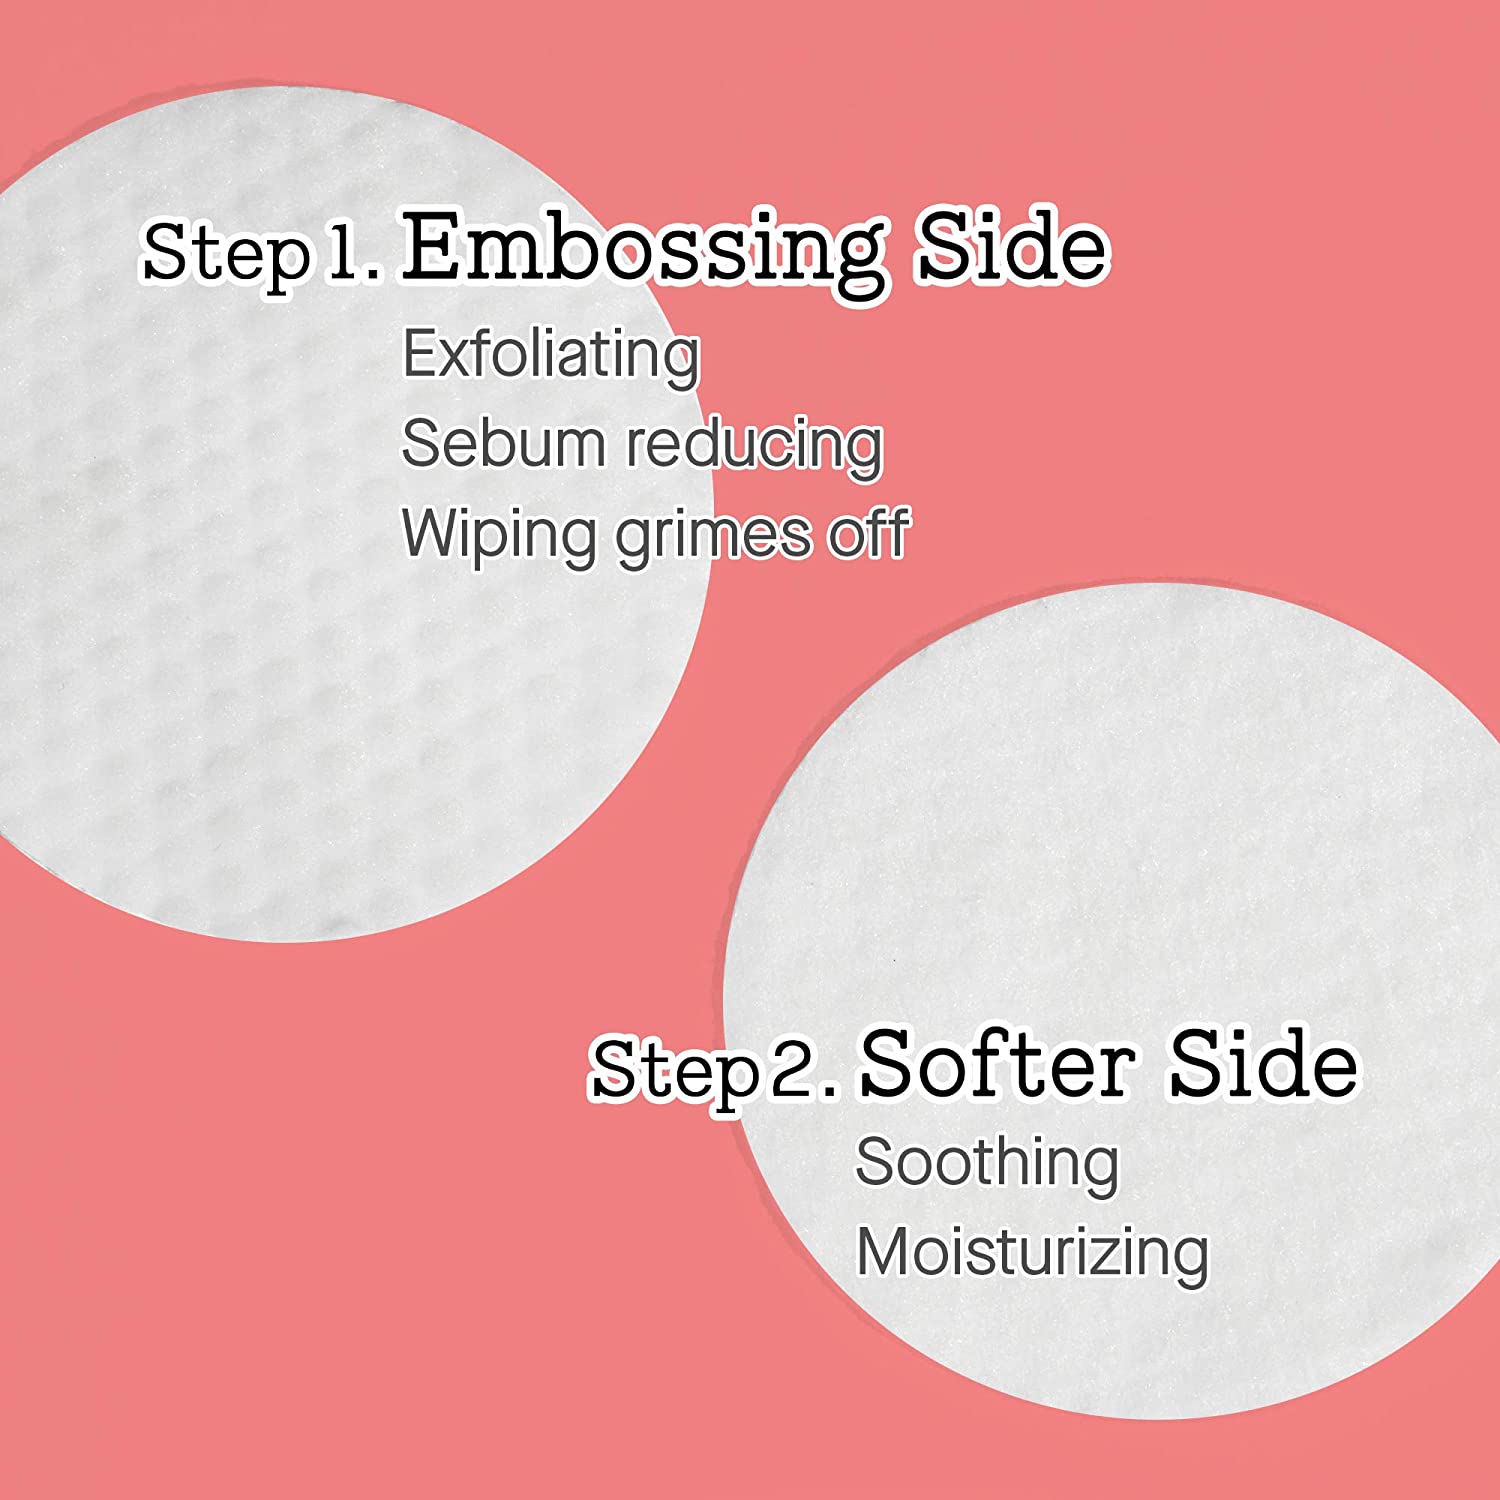 COSRX One Step Original Clear Pad 70 Pads Acne Mild For Sensitive Skin